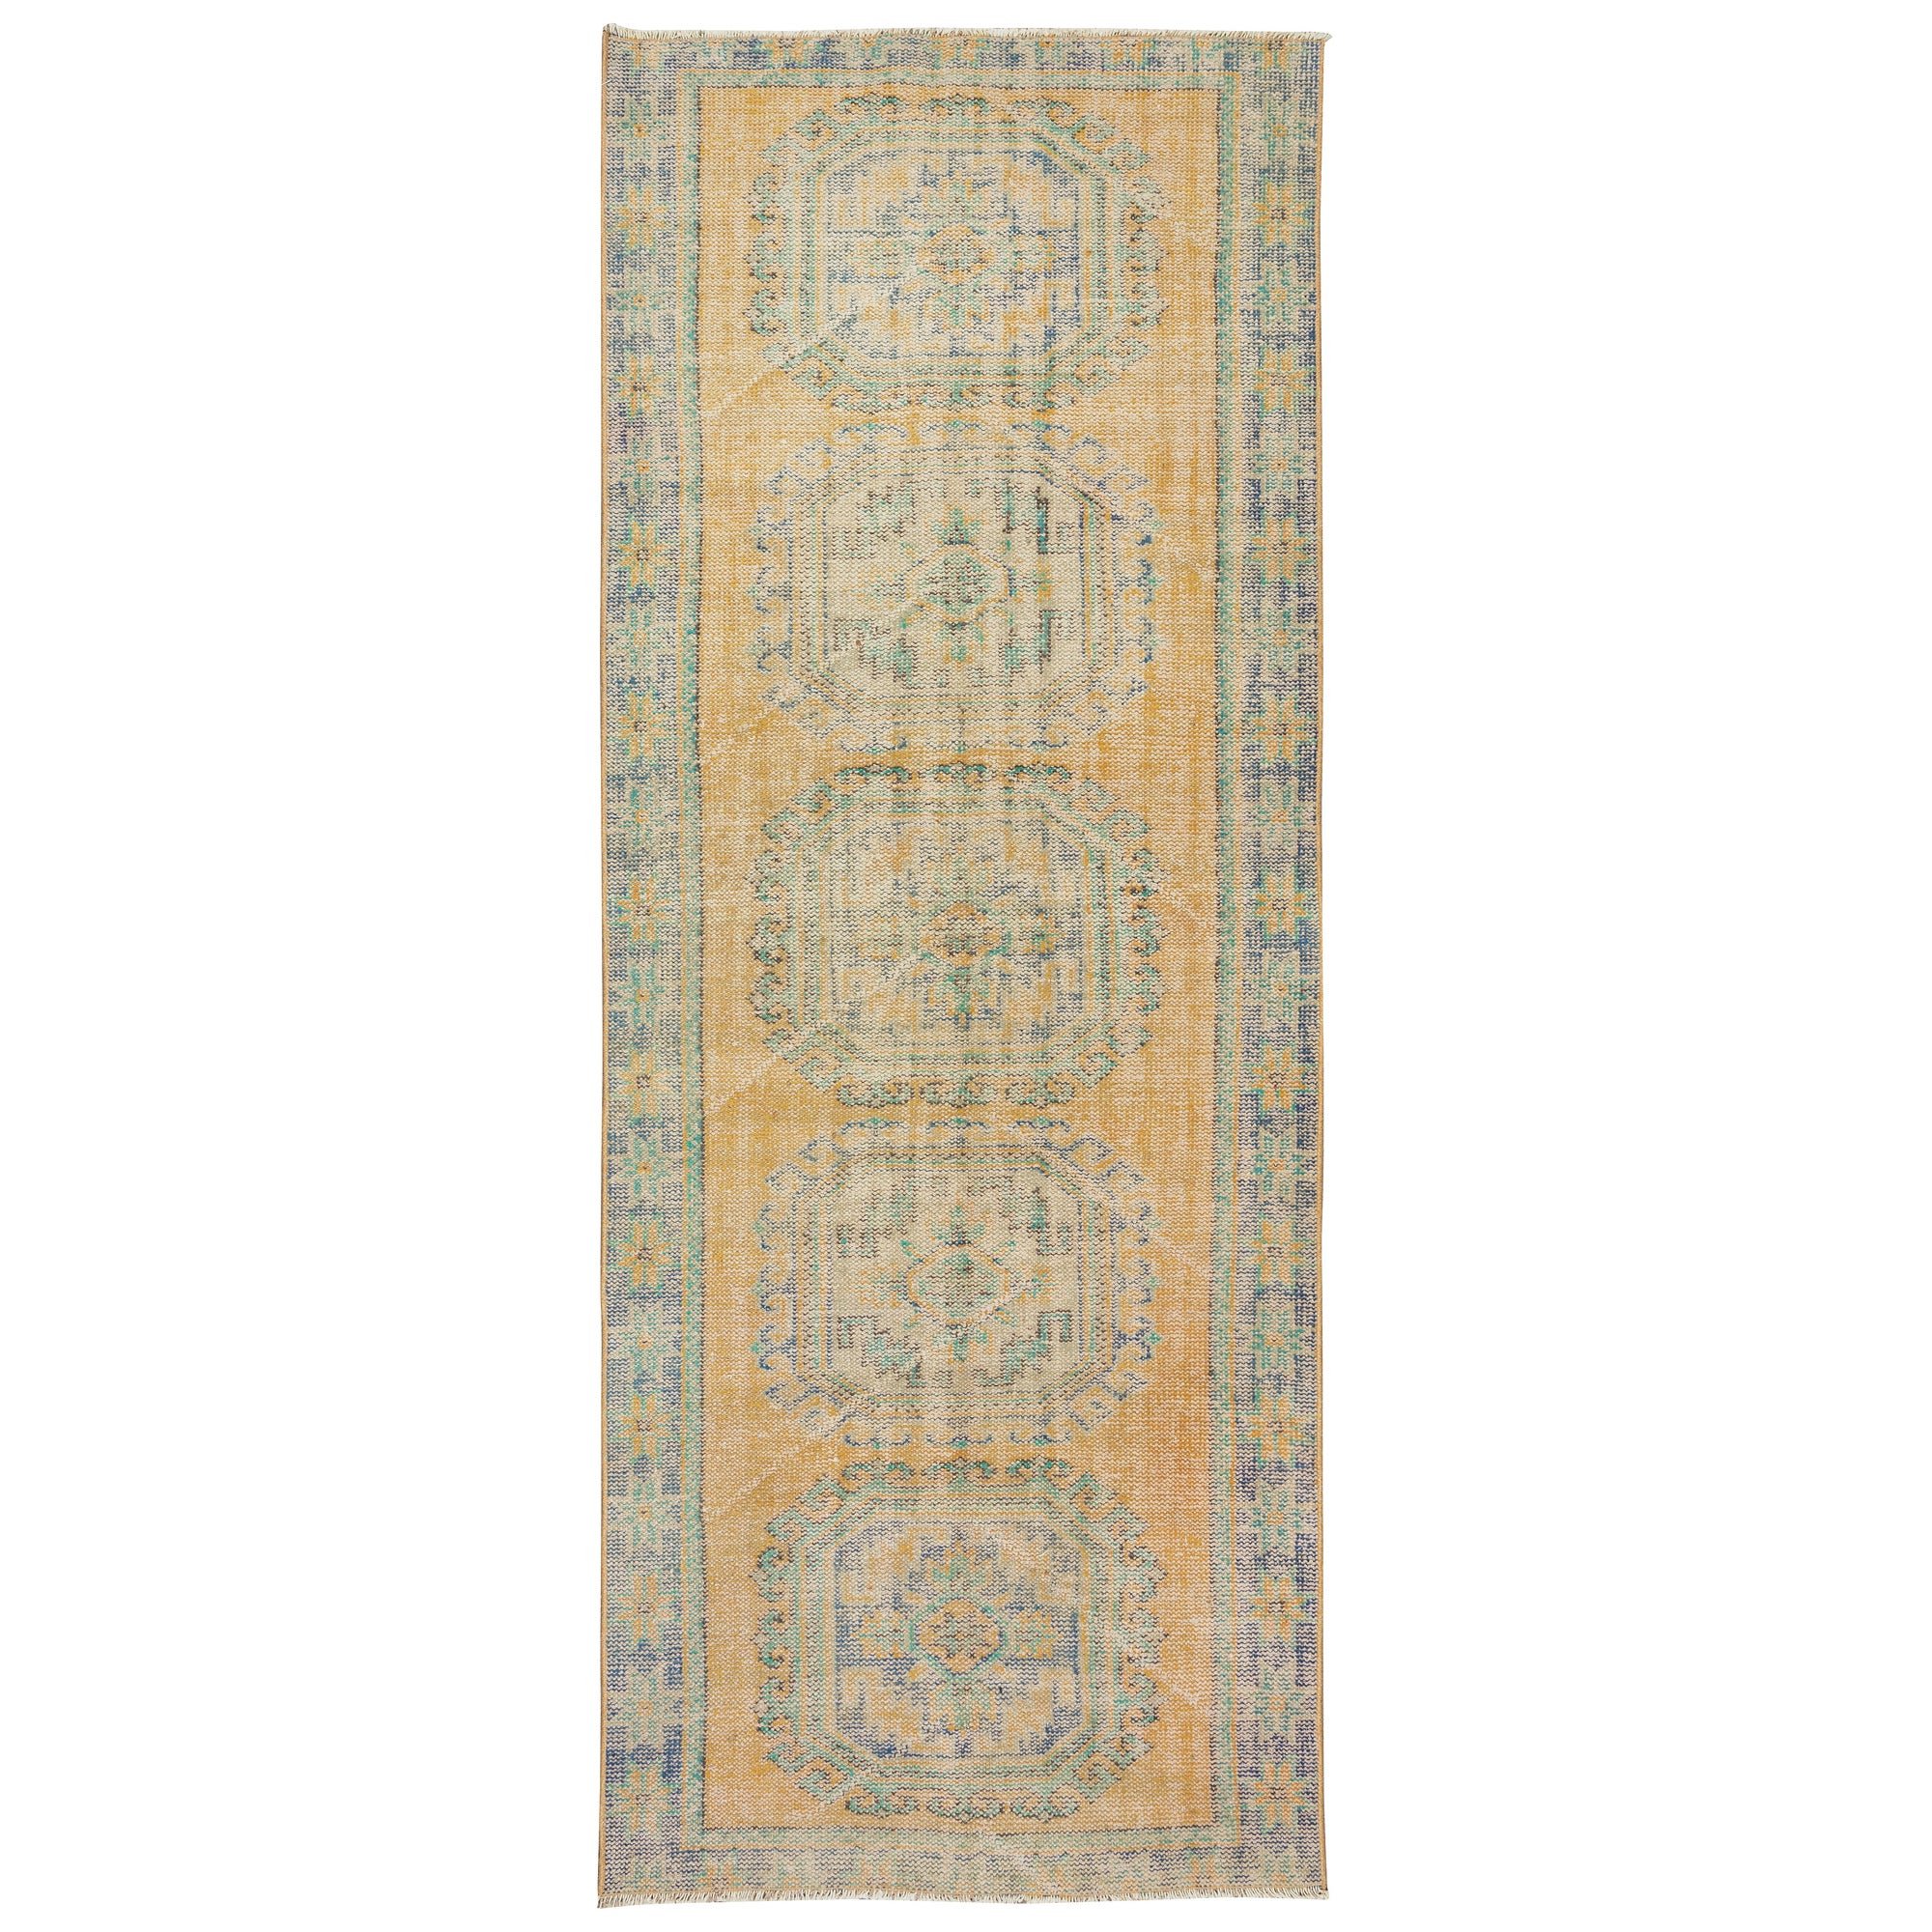 4.2x11 ft Handmade Turkish Hallway Runner Rug, Vintage Corridor Carpet in Orange For Sale